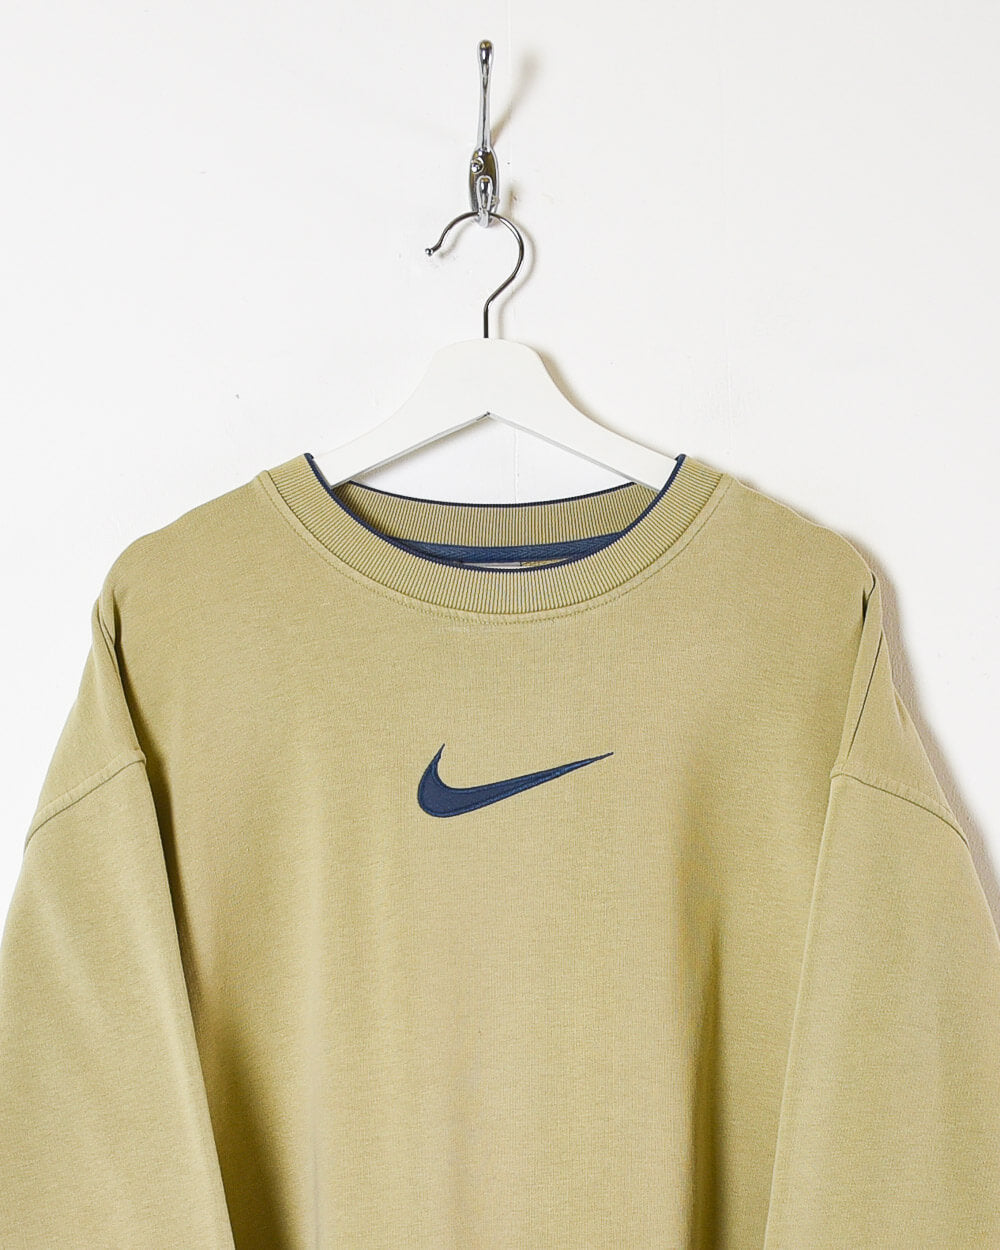 Neutral Nike Sweatshirt - X-Large